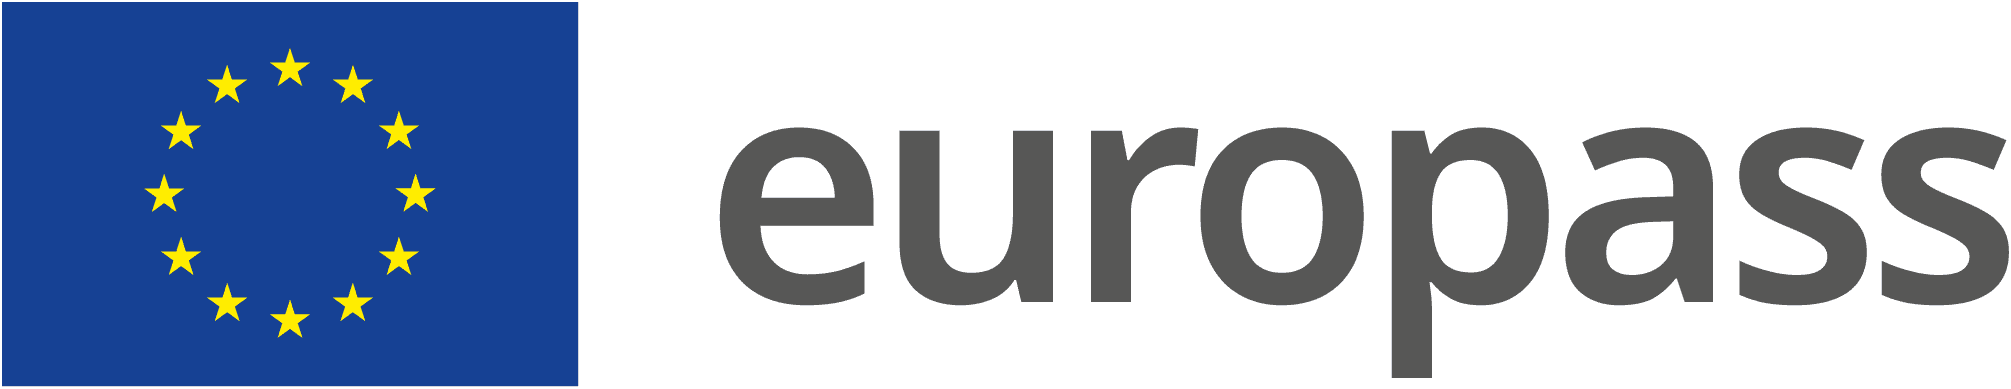 Europass – logo